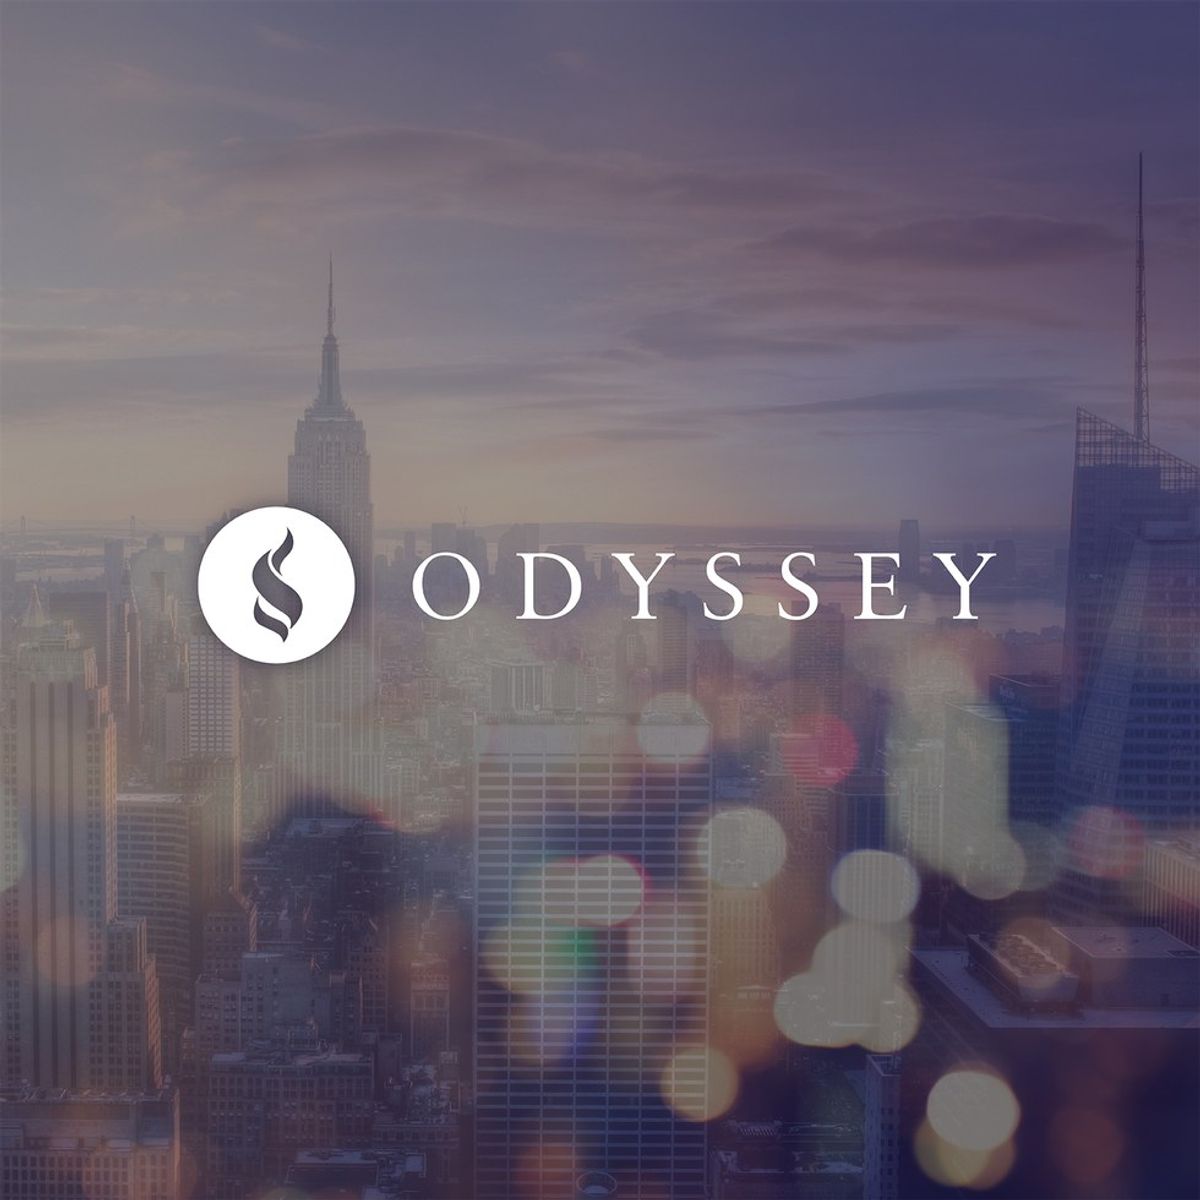 Why I Write For Odyssey